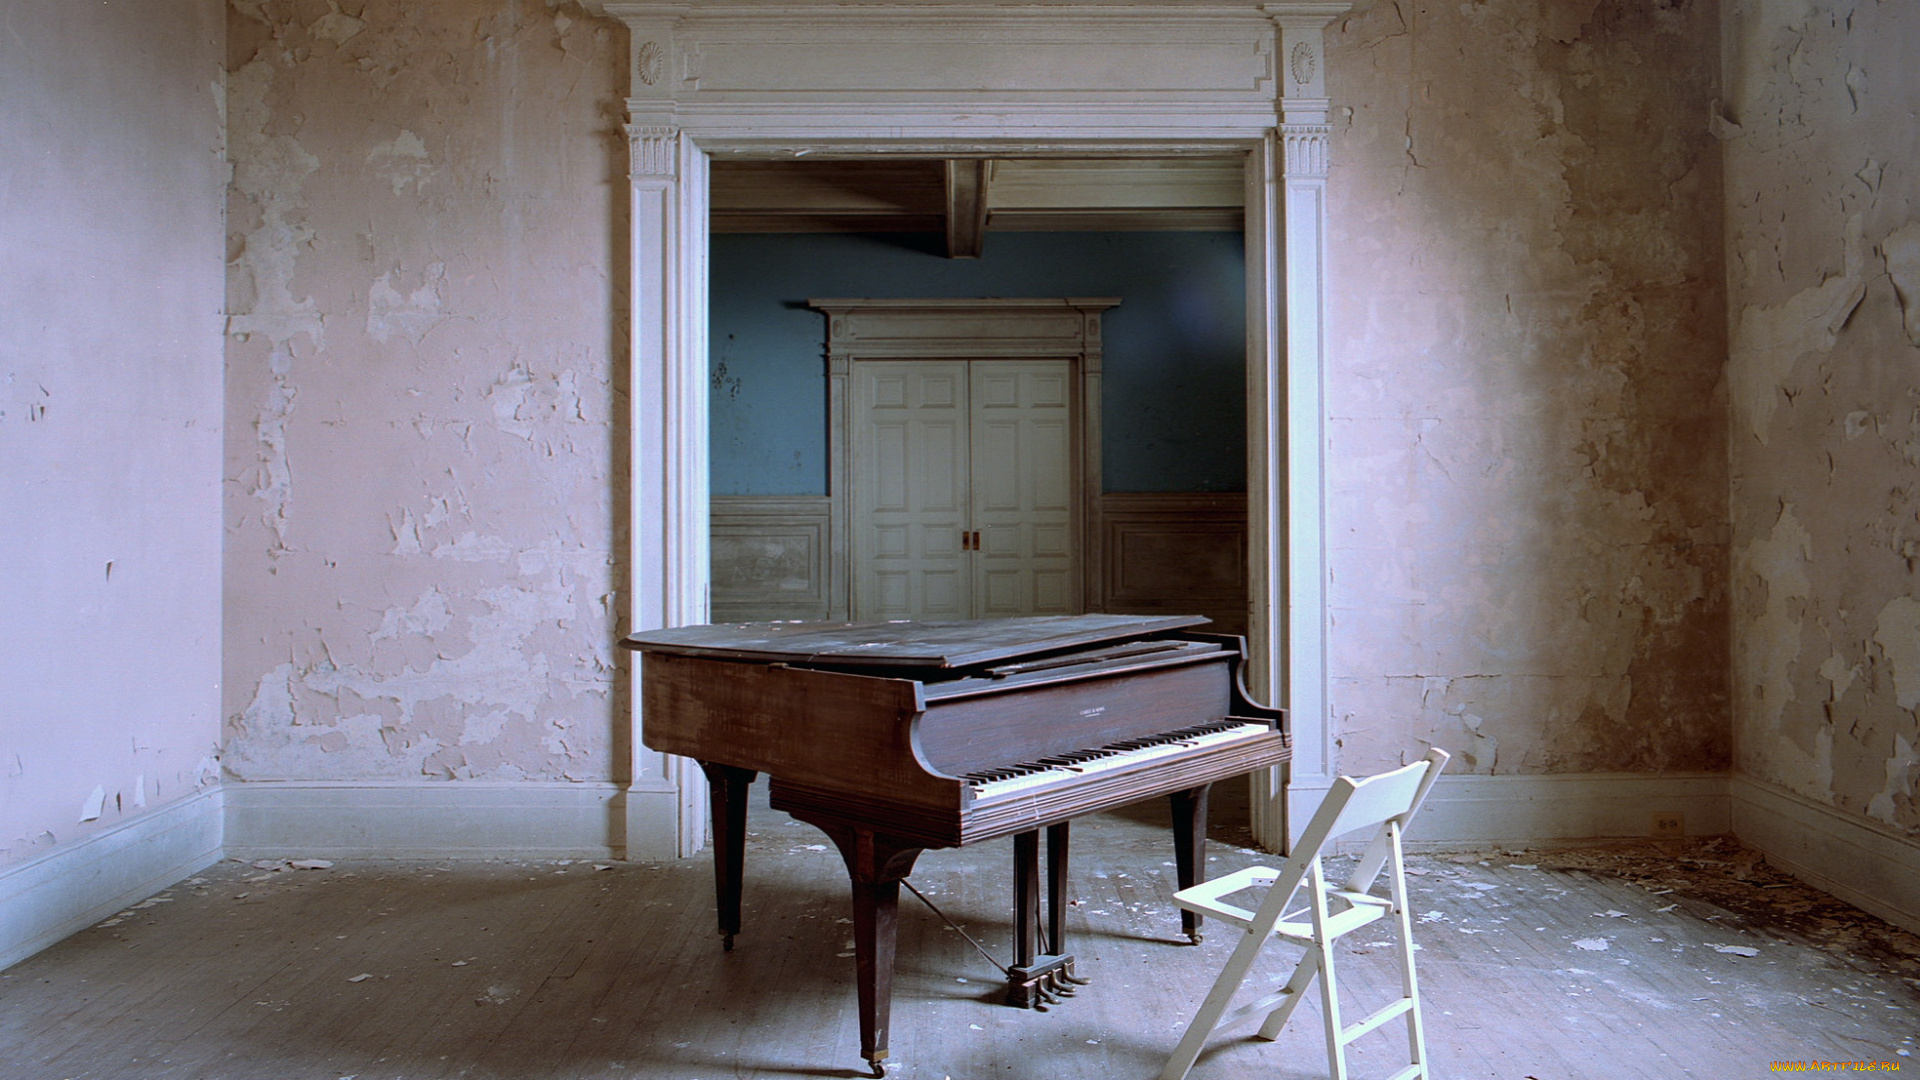 музыка, -музыкальные, инструменты, пианино, ремонт, комната, стул